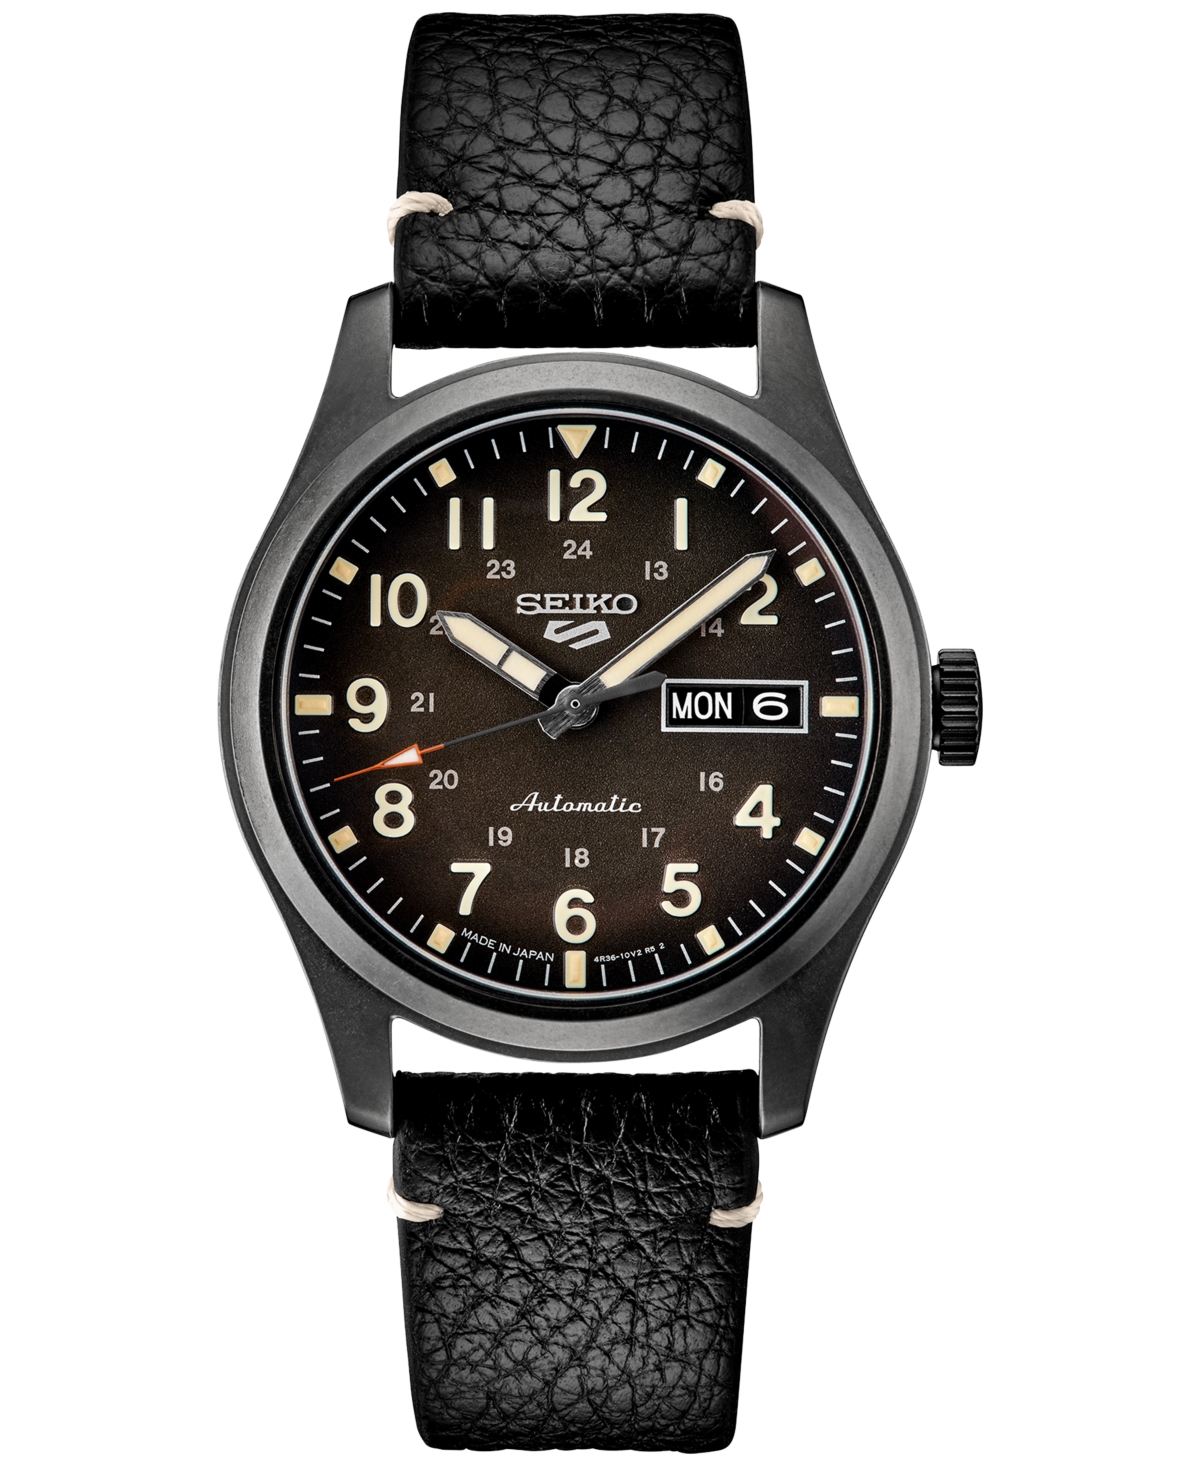 Men's Automatic 5 Sports Black Leather Strap Watch 43mm - Black